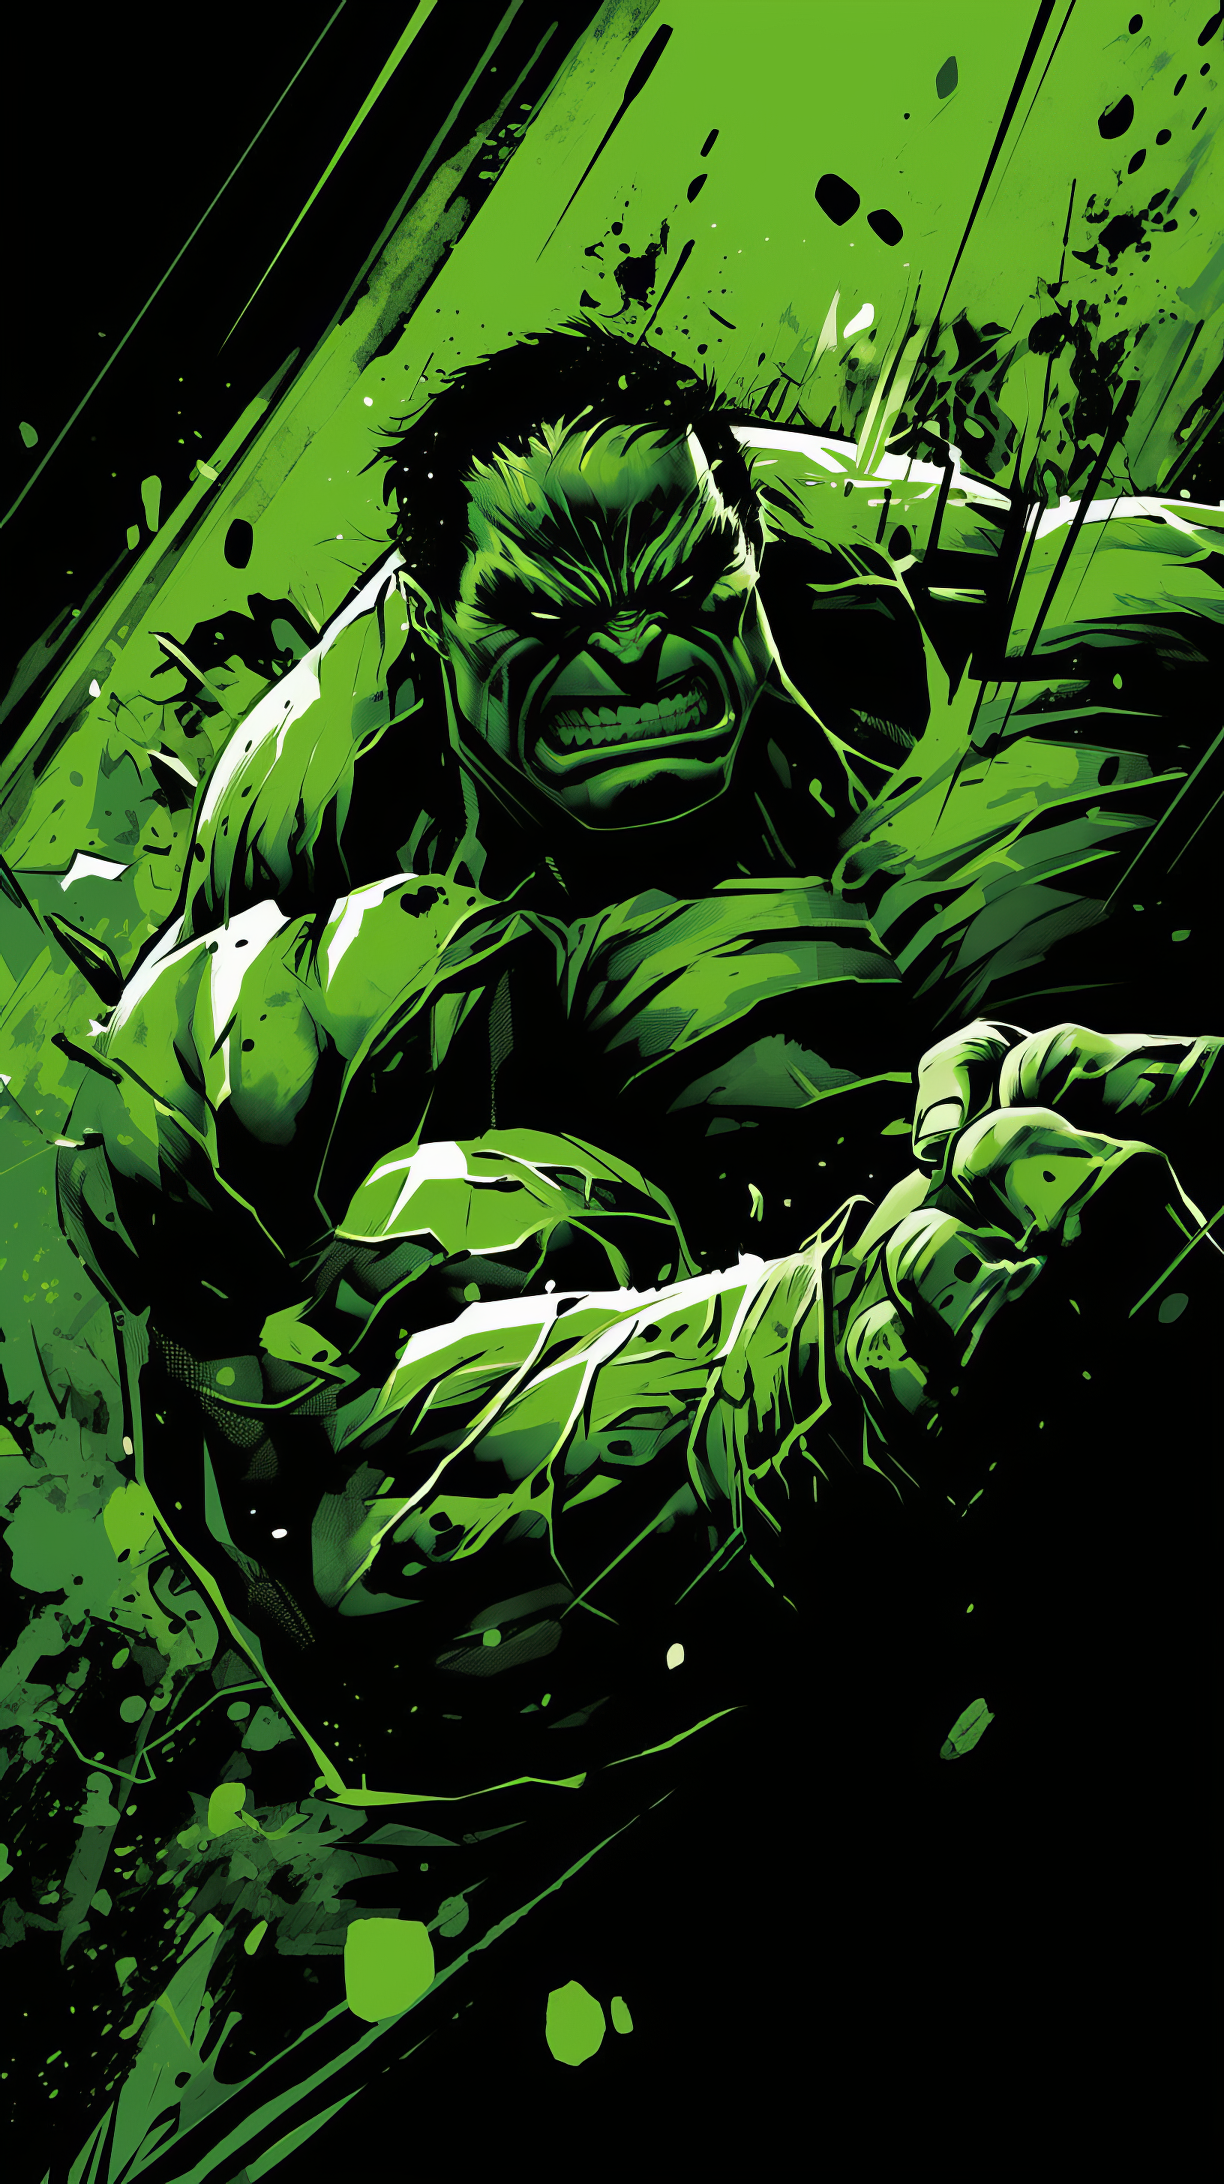 Dynamic Hulk wallpaper showcasing the superhero in action, ideal for phone screens.